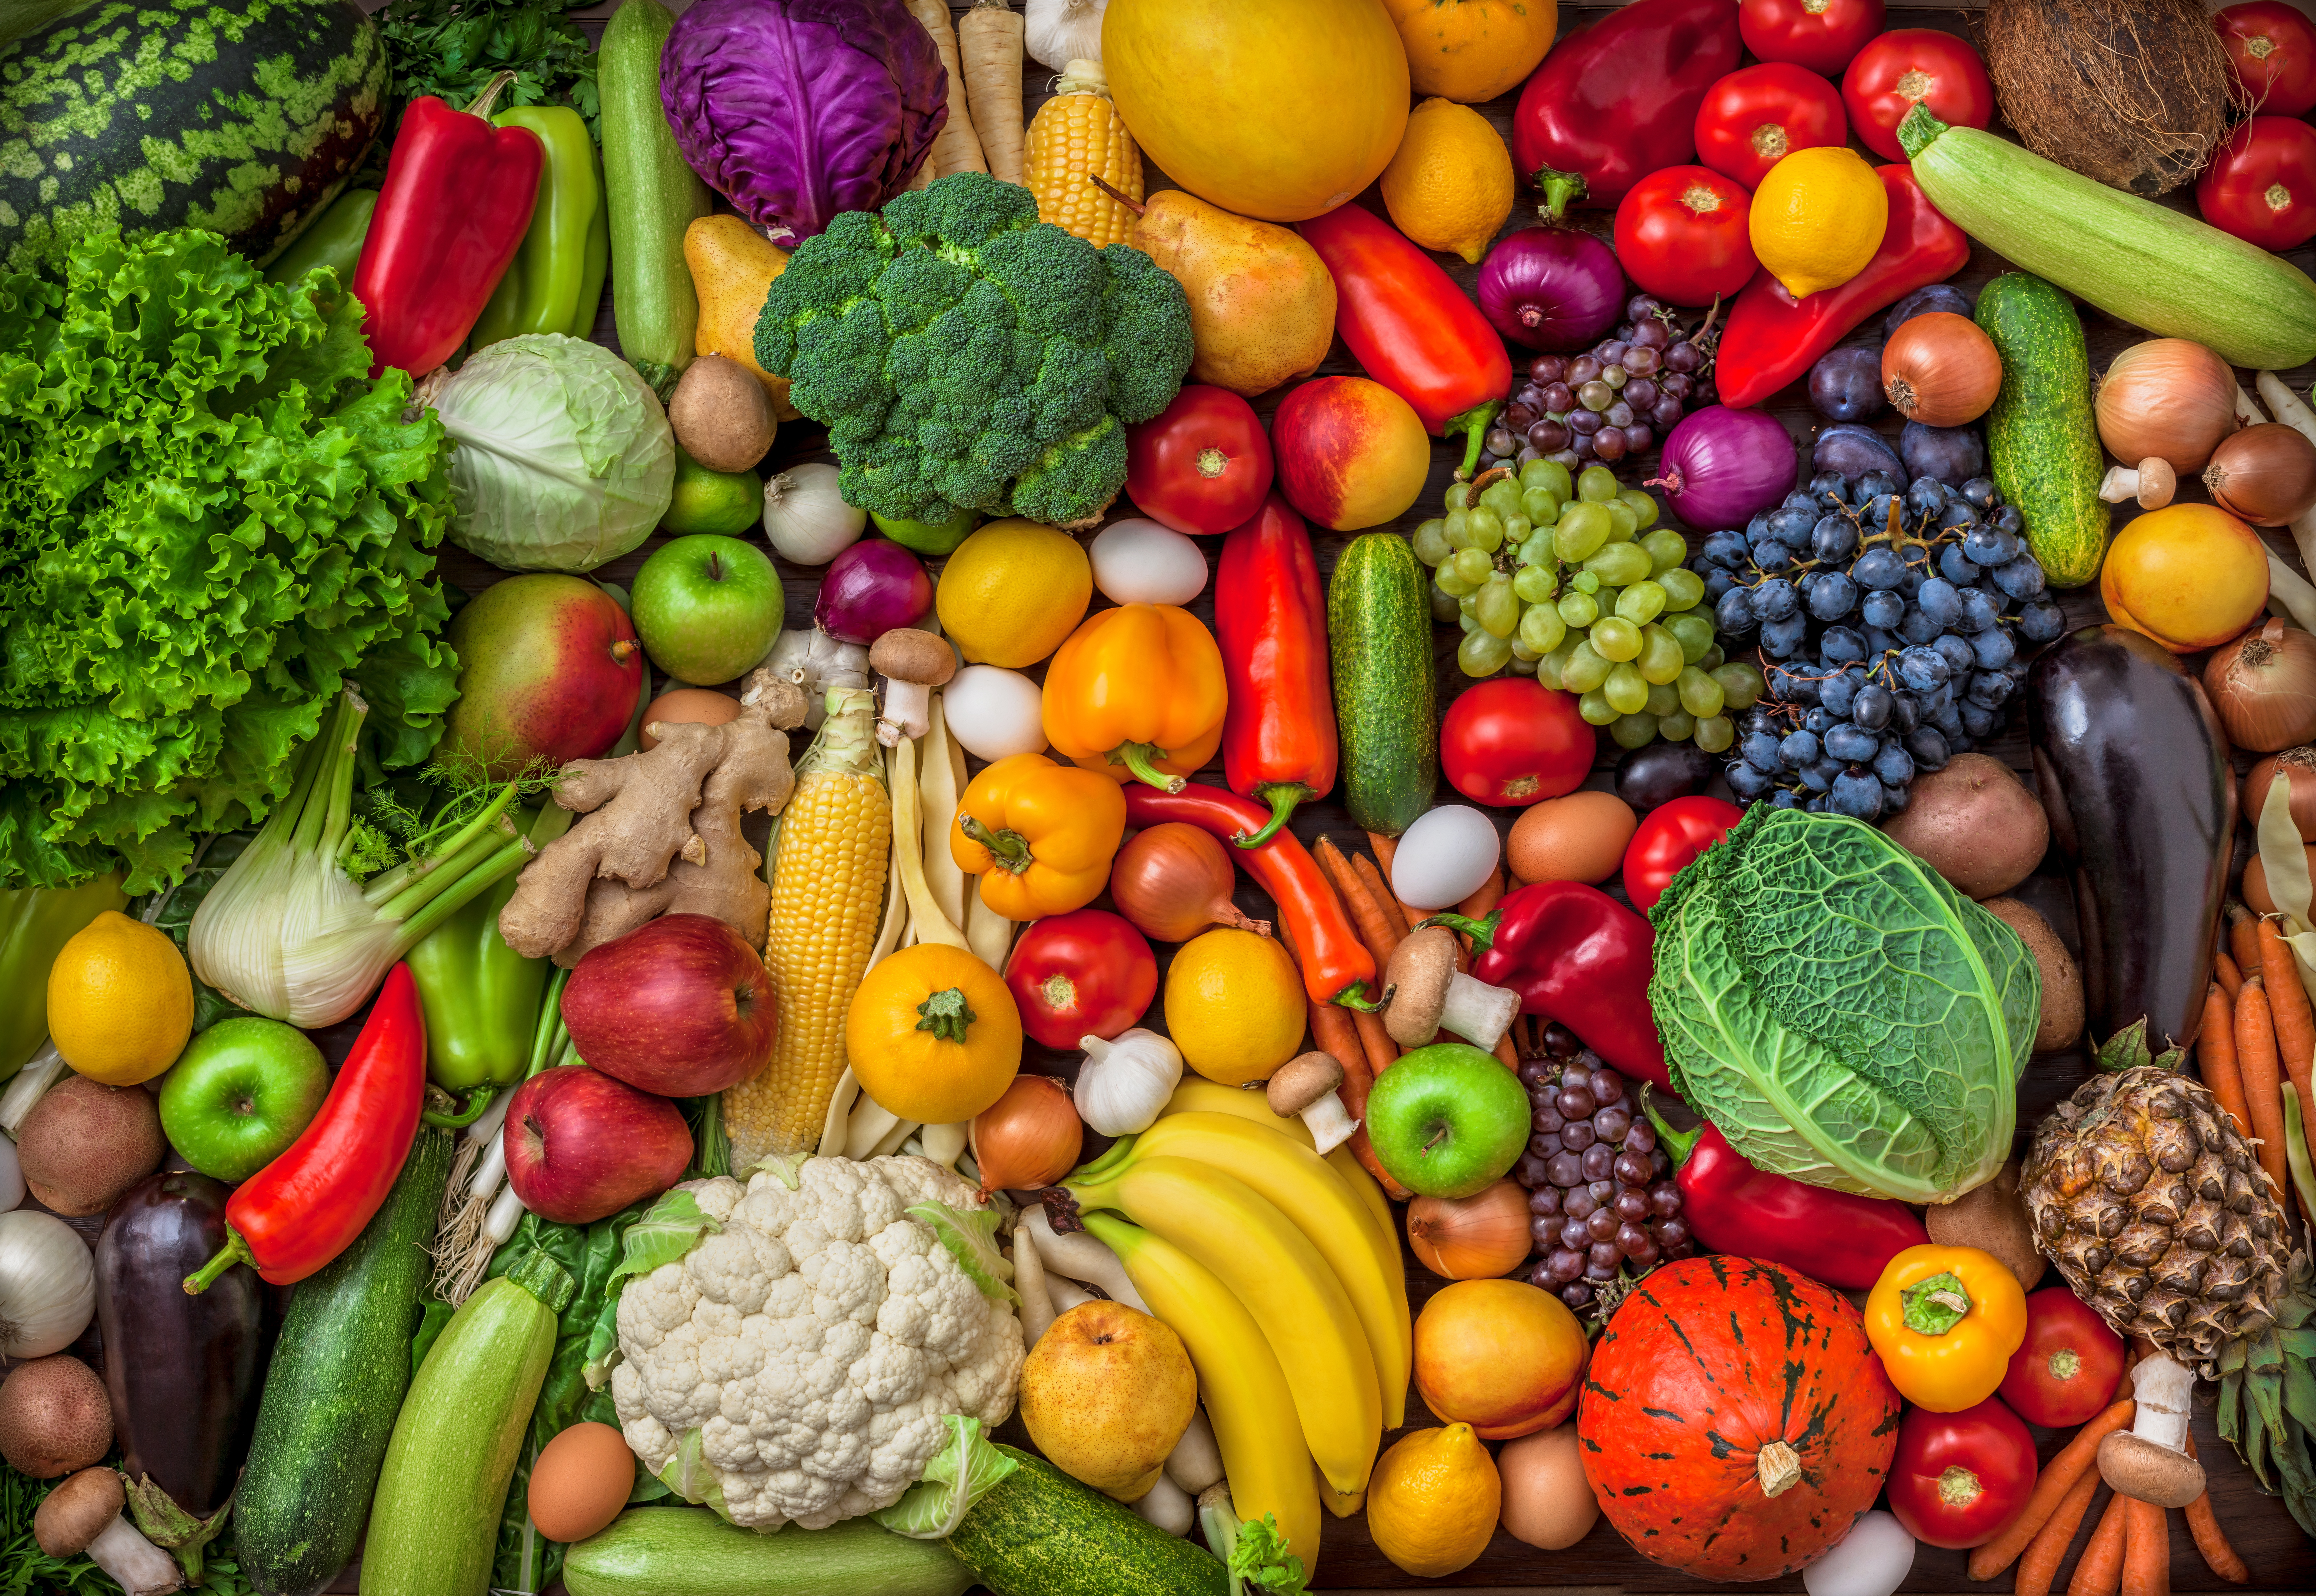 Fruits & Vegetables 8k Ultra HD Wallpaper